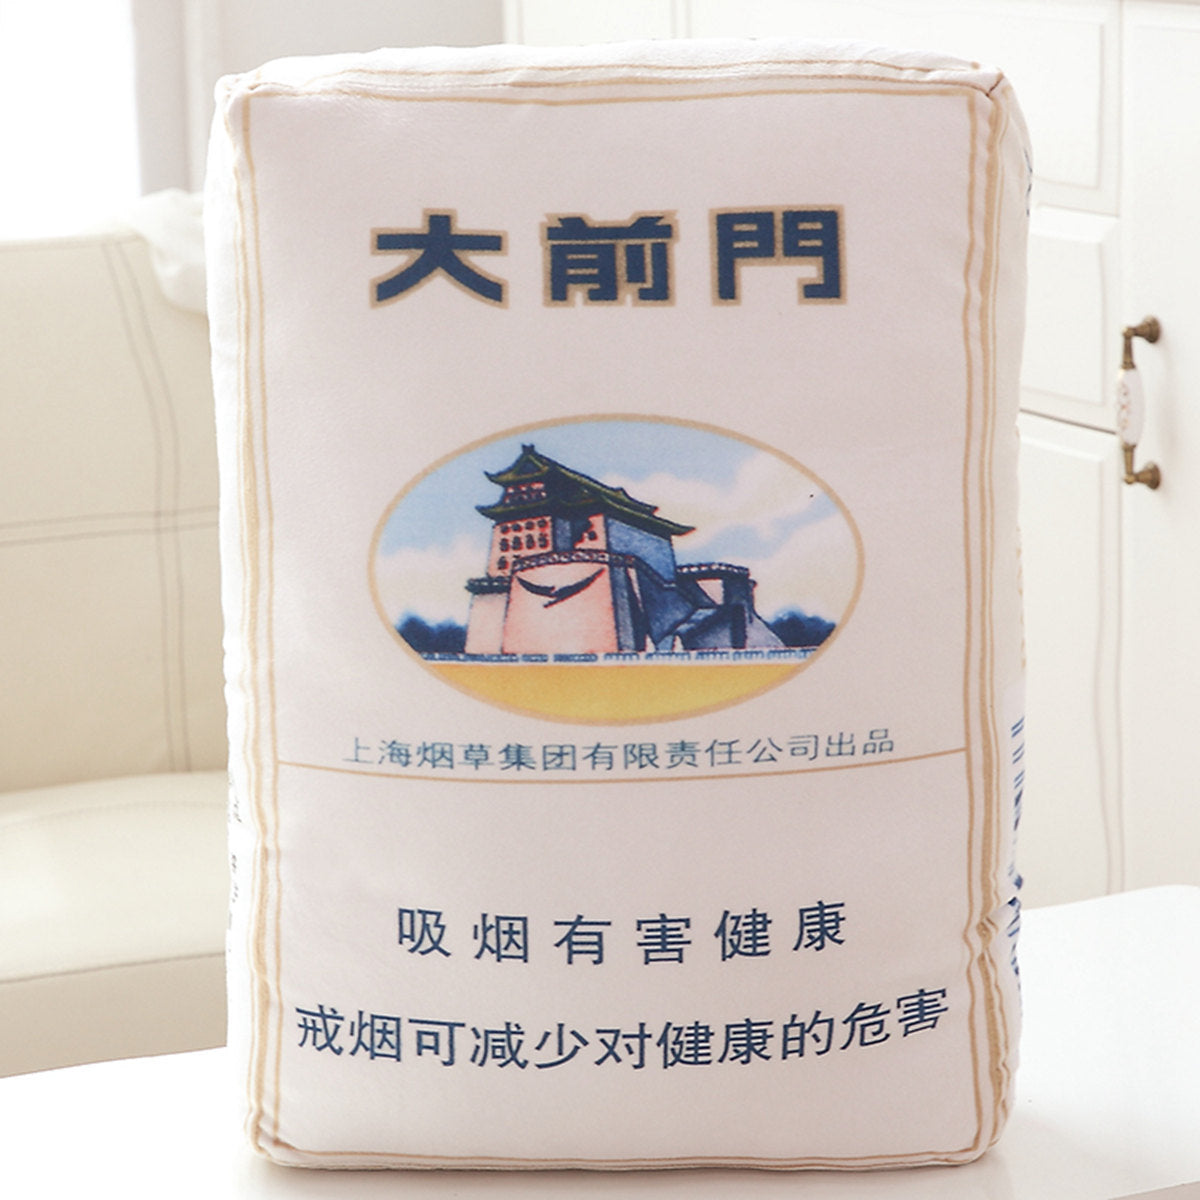 Cigarette Pillow Creative Plush Toy Yuxi Laigen Huazi Pillow Lover Gifts for Boys Gift